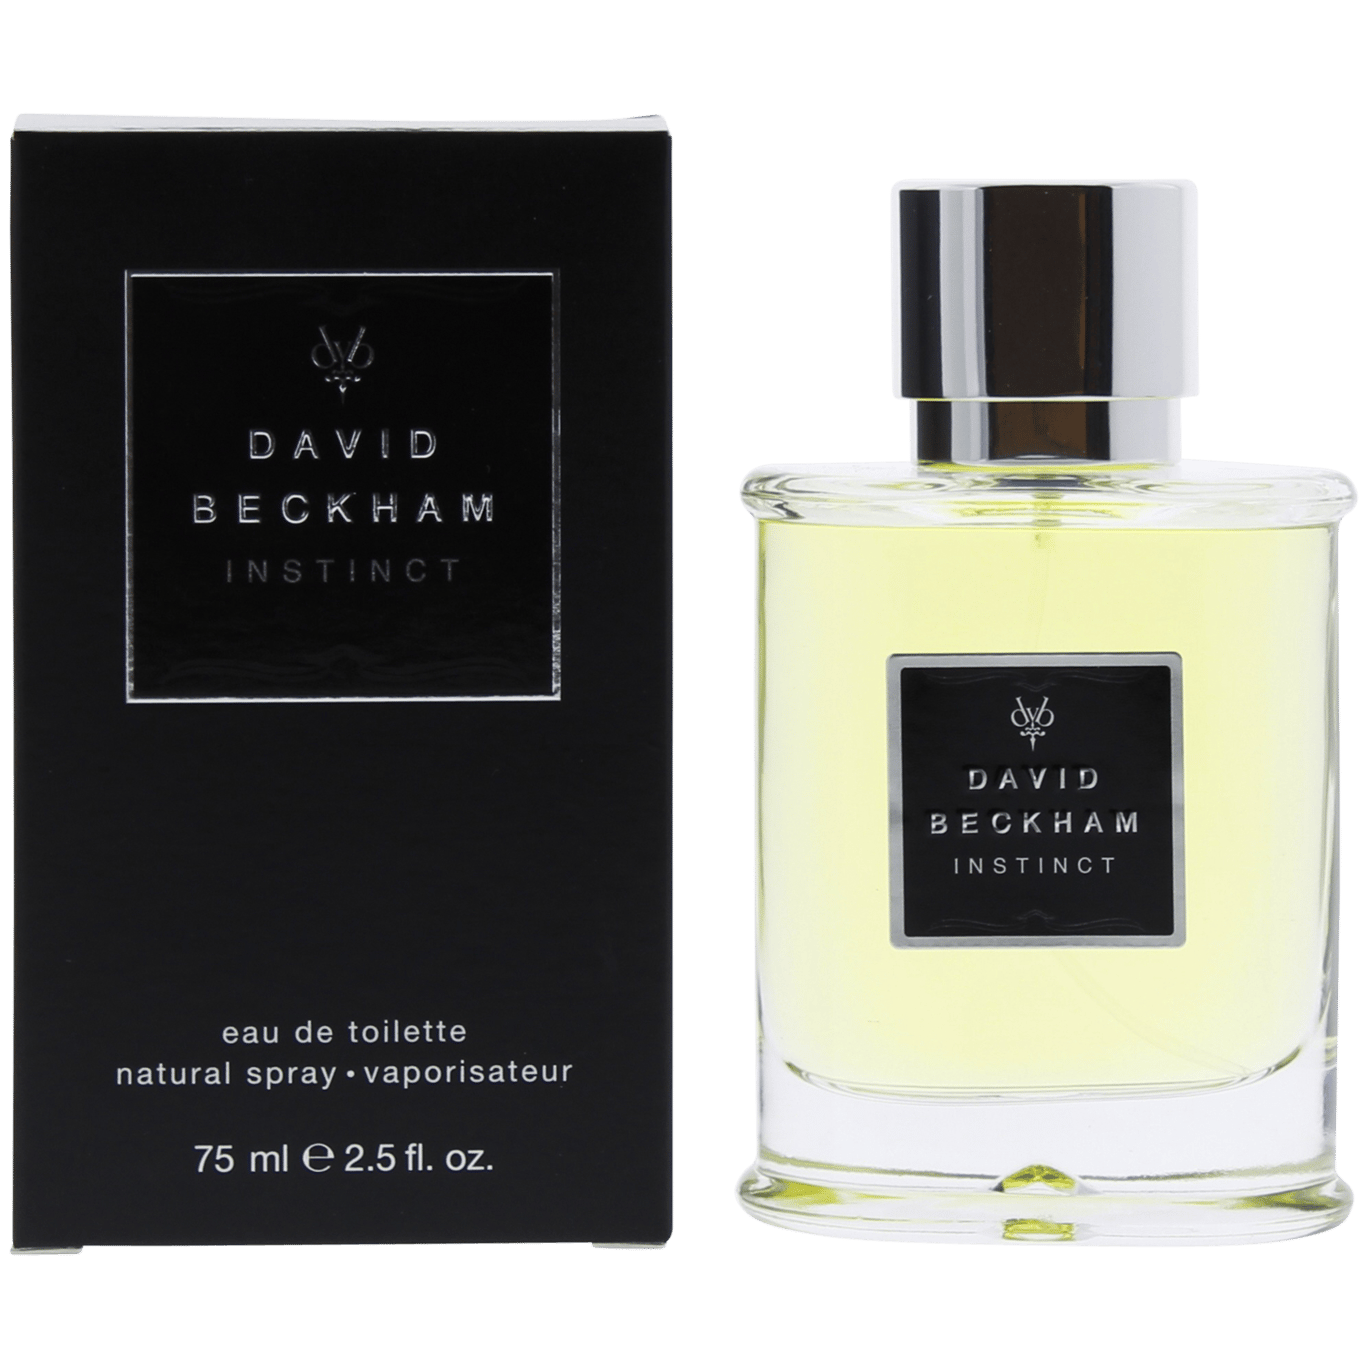 david beckham parfum neu